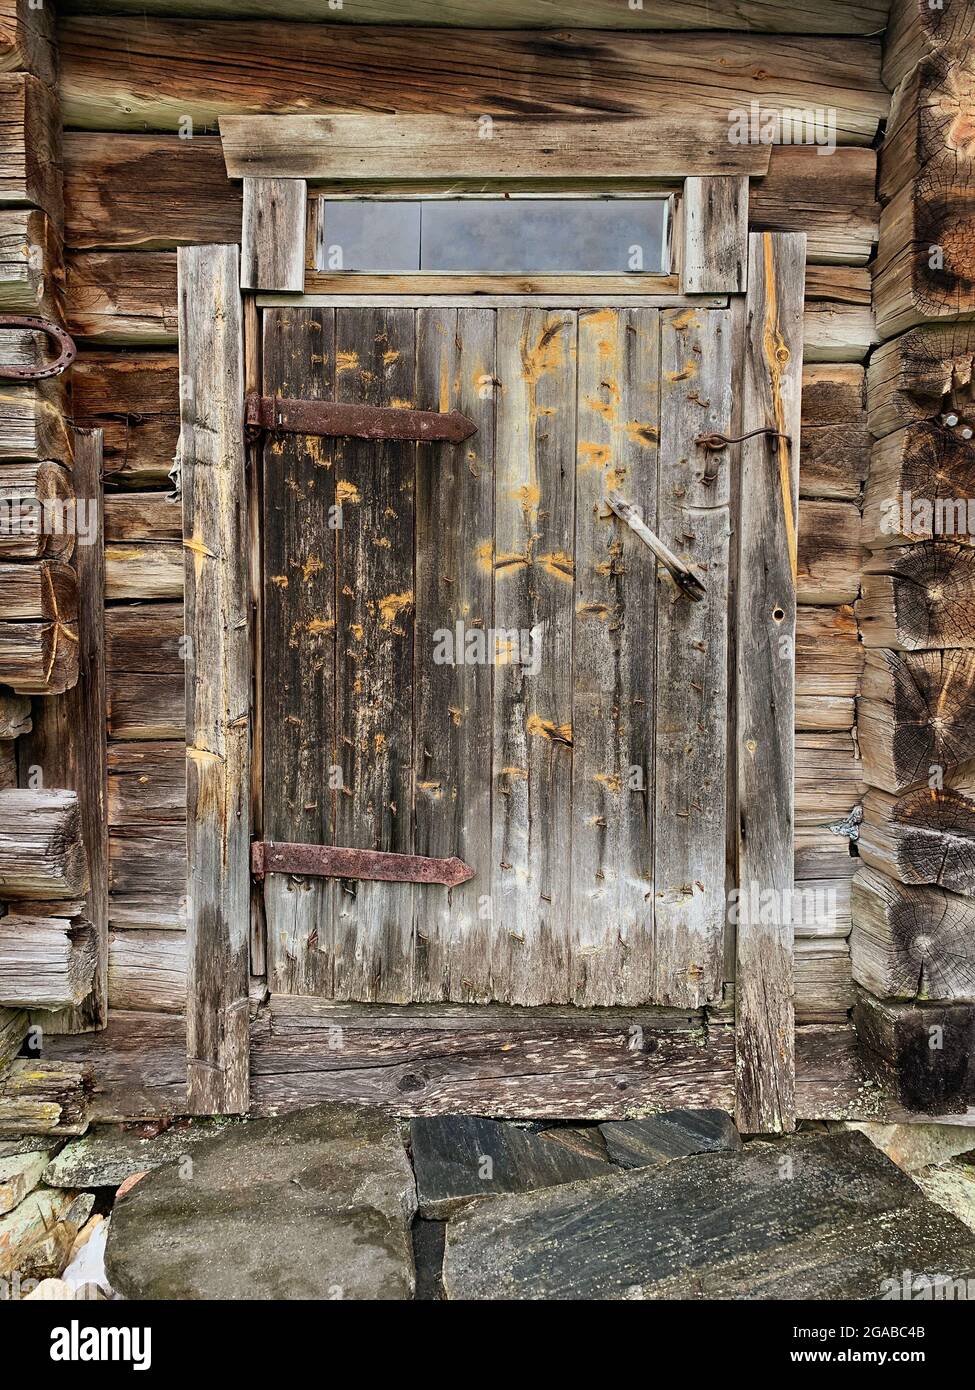 Weatherd worn wooden plank door of an old log house cabin Stock Photo